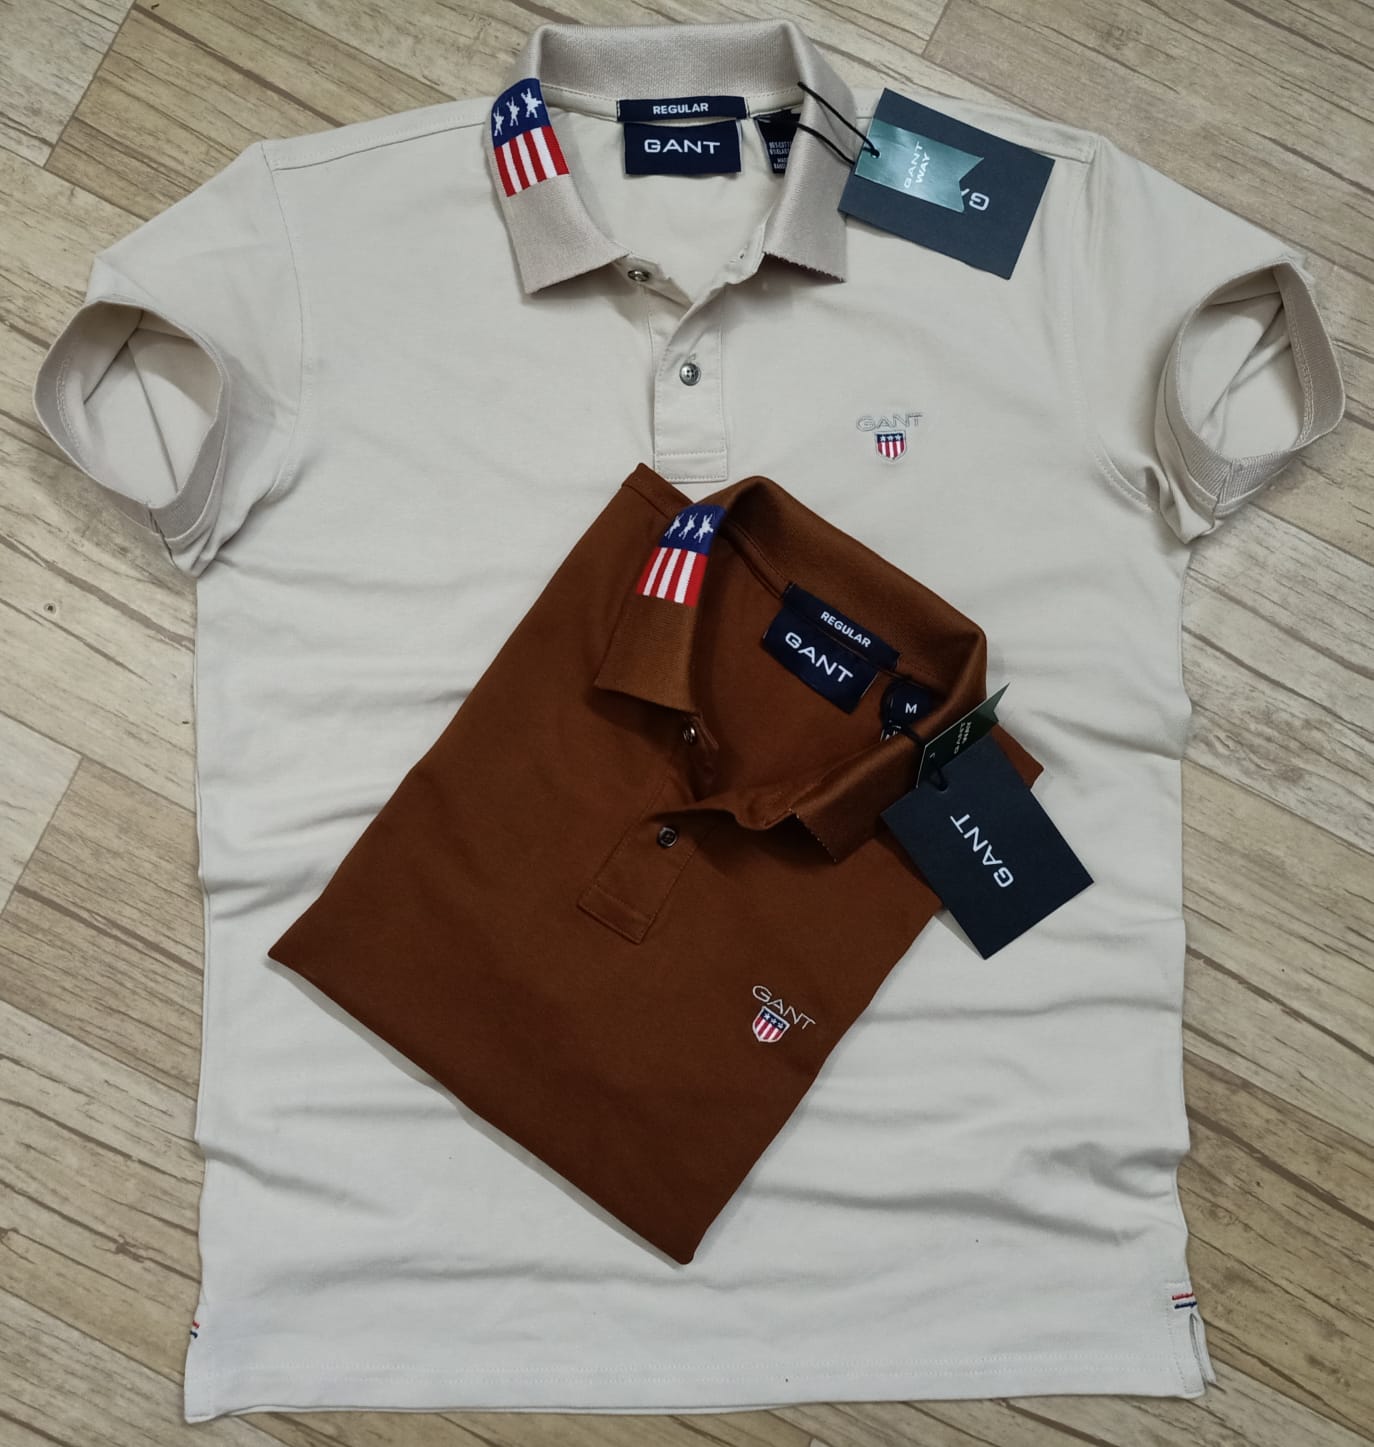 Imported Super Premium Cotton Polo Shirt For Men (ZGANT05) - Cream